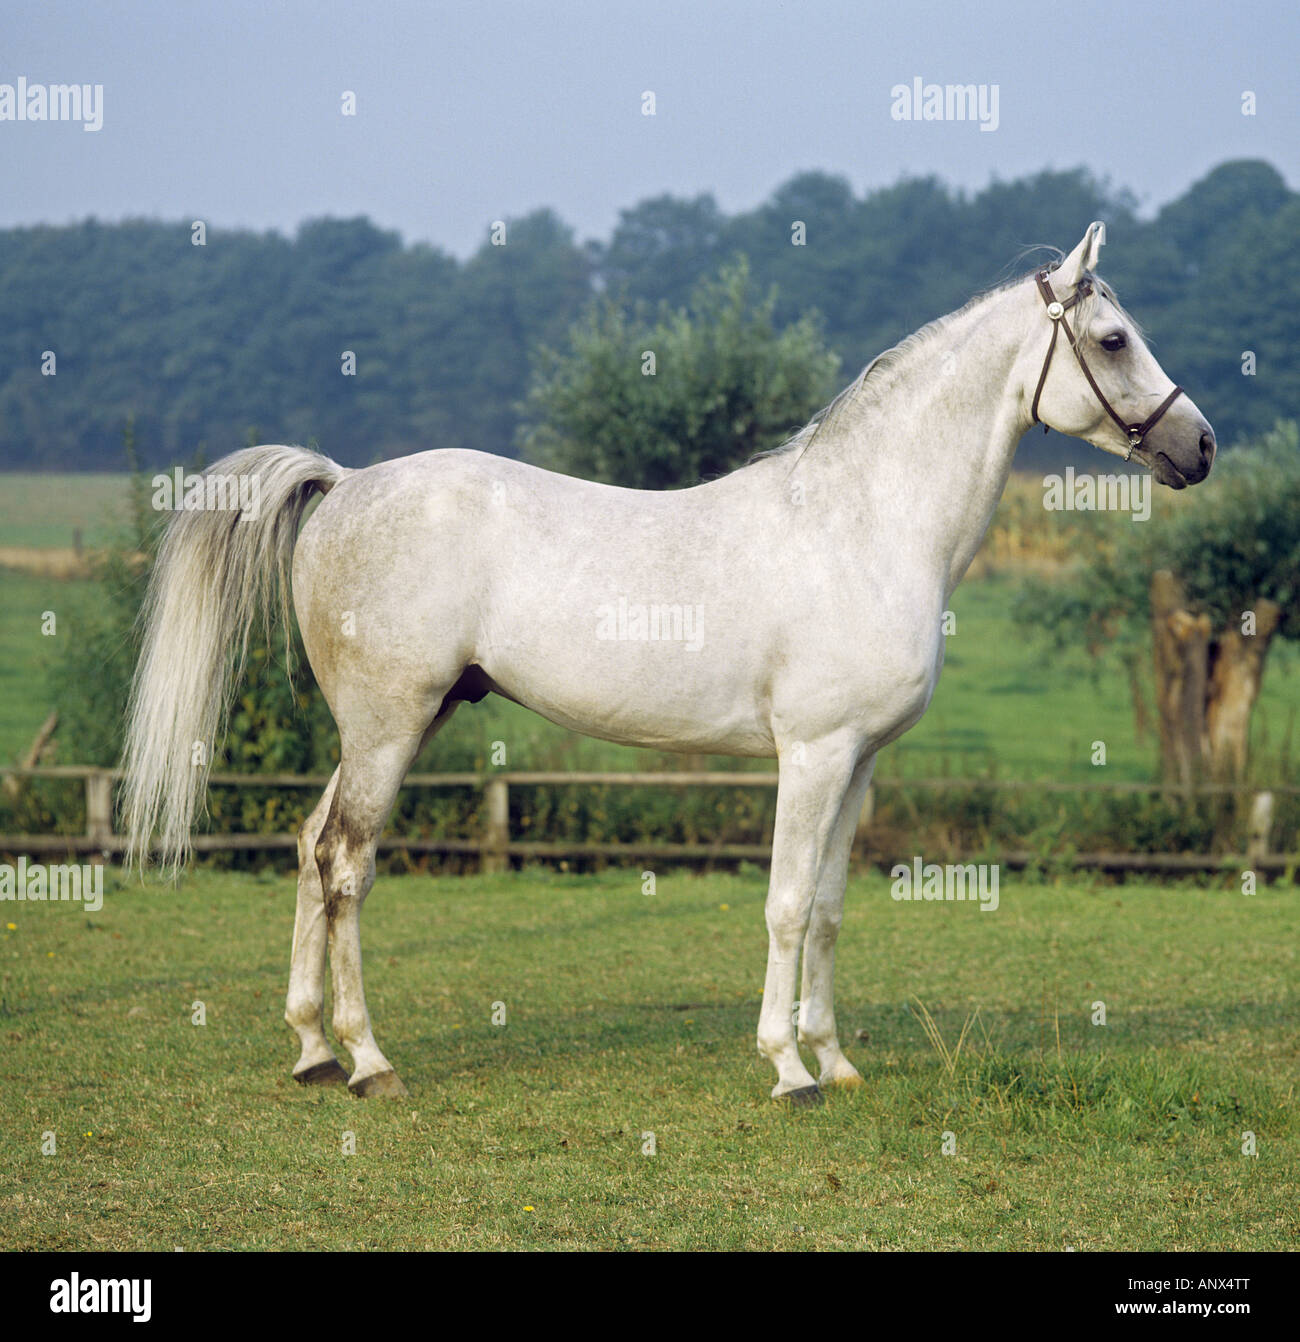 Arabian Horse Standing